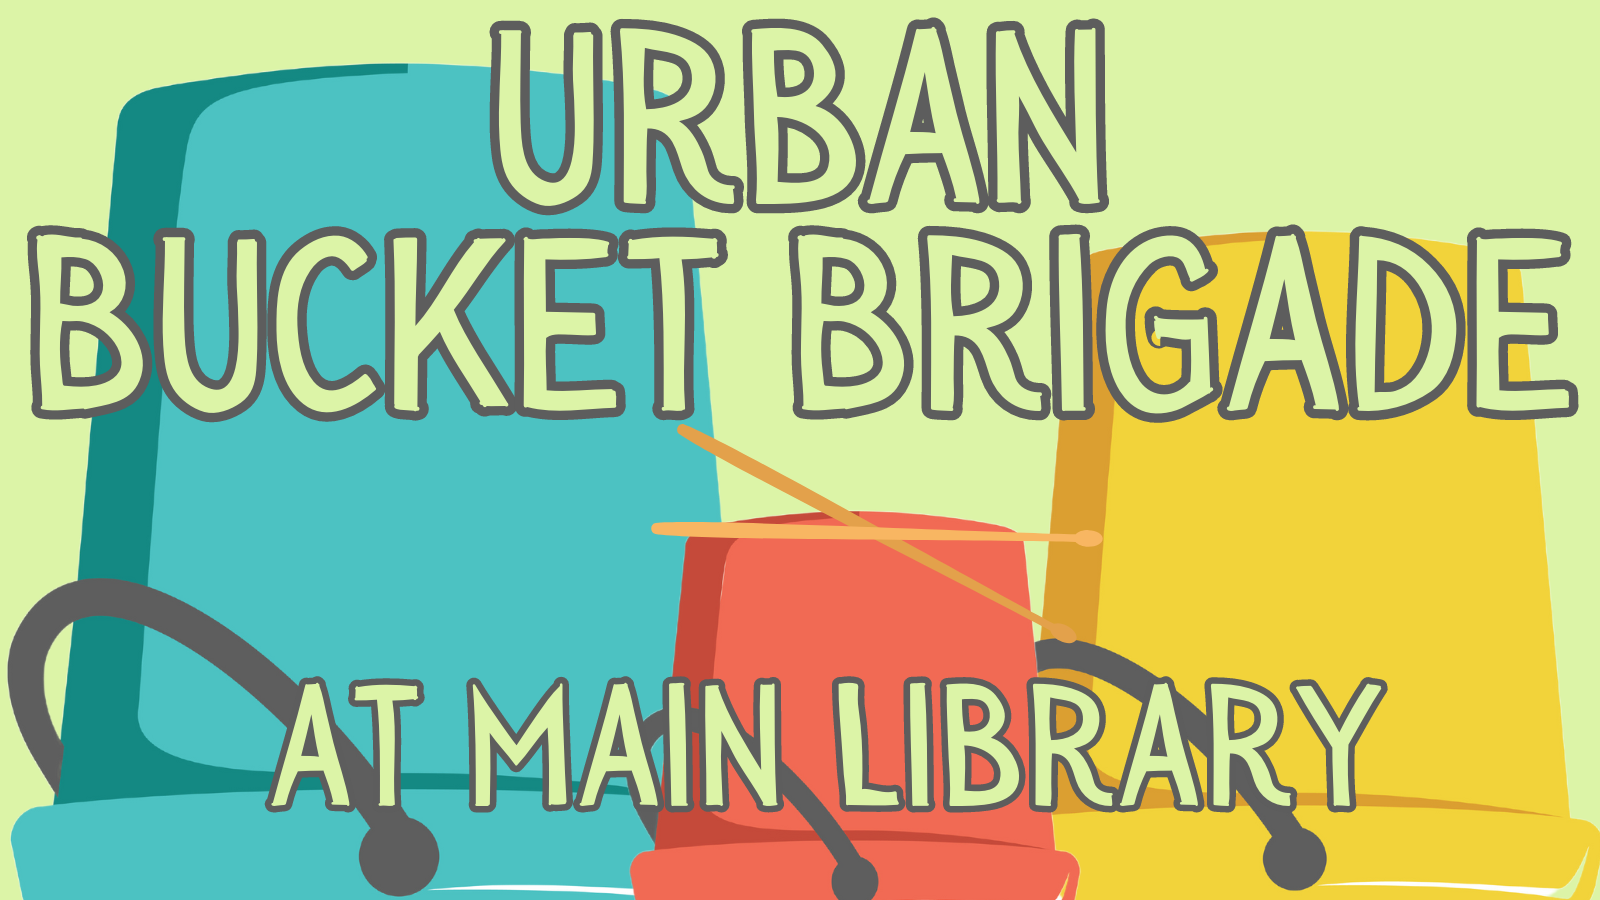 "Urban Bucket Brigade at Main Library" with three overturned buckets